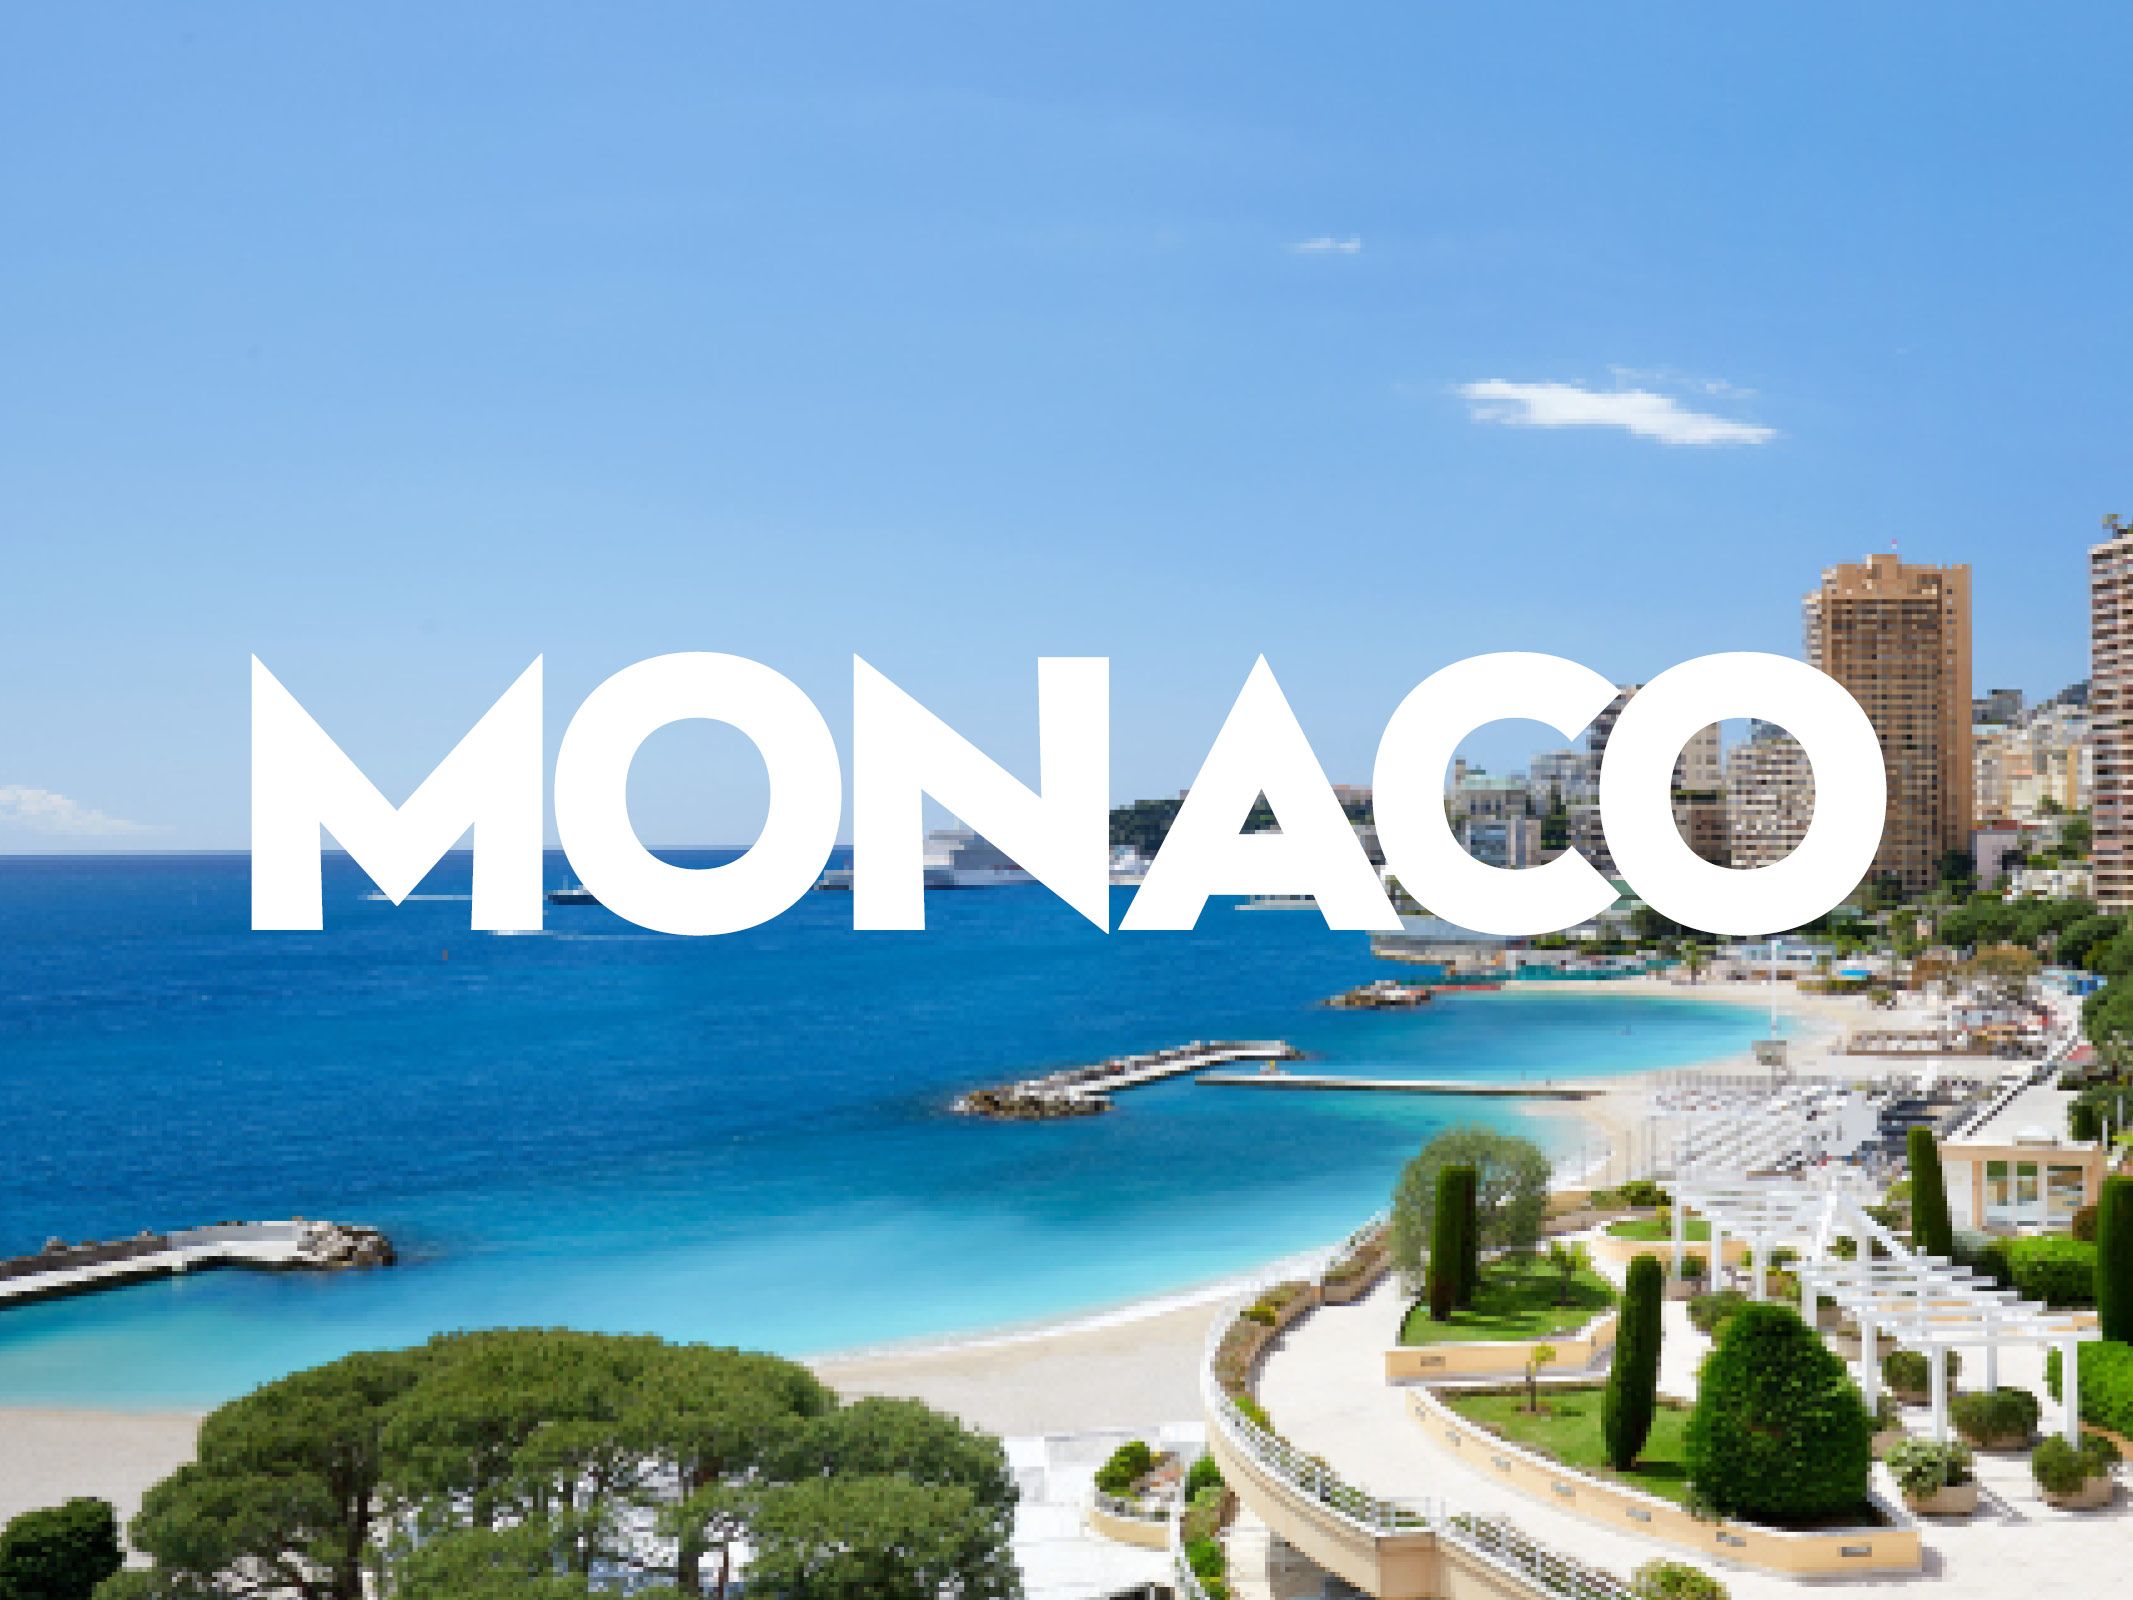 Le Meridien Monaco Casting Day